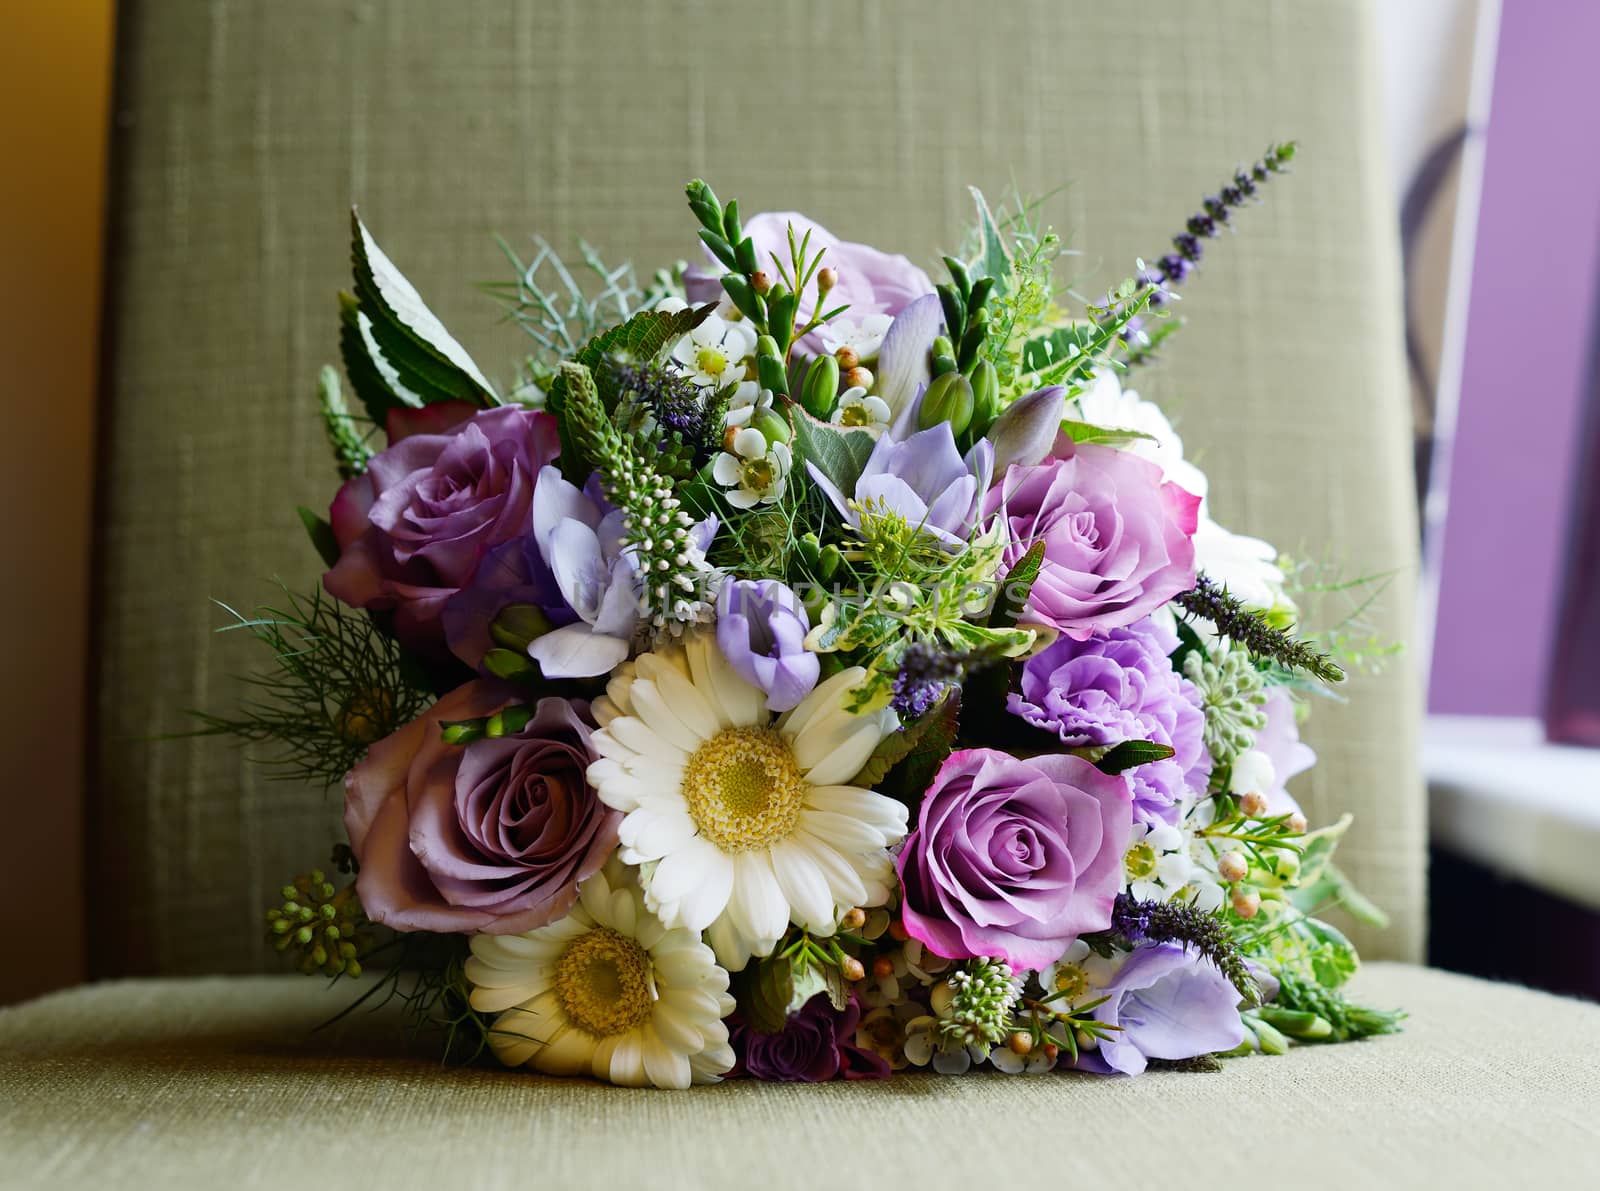 Brides purple bouquet of flowers on wedding day